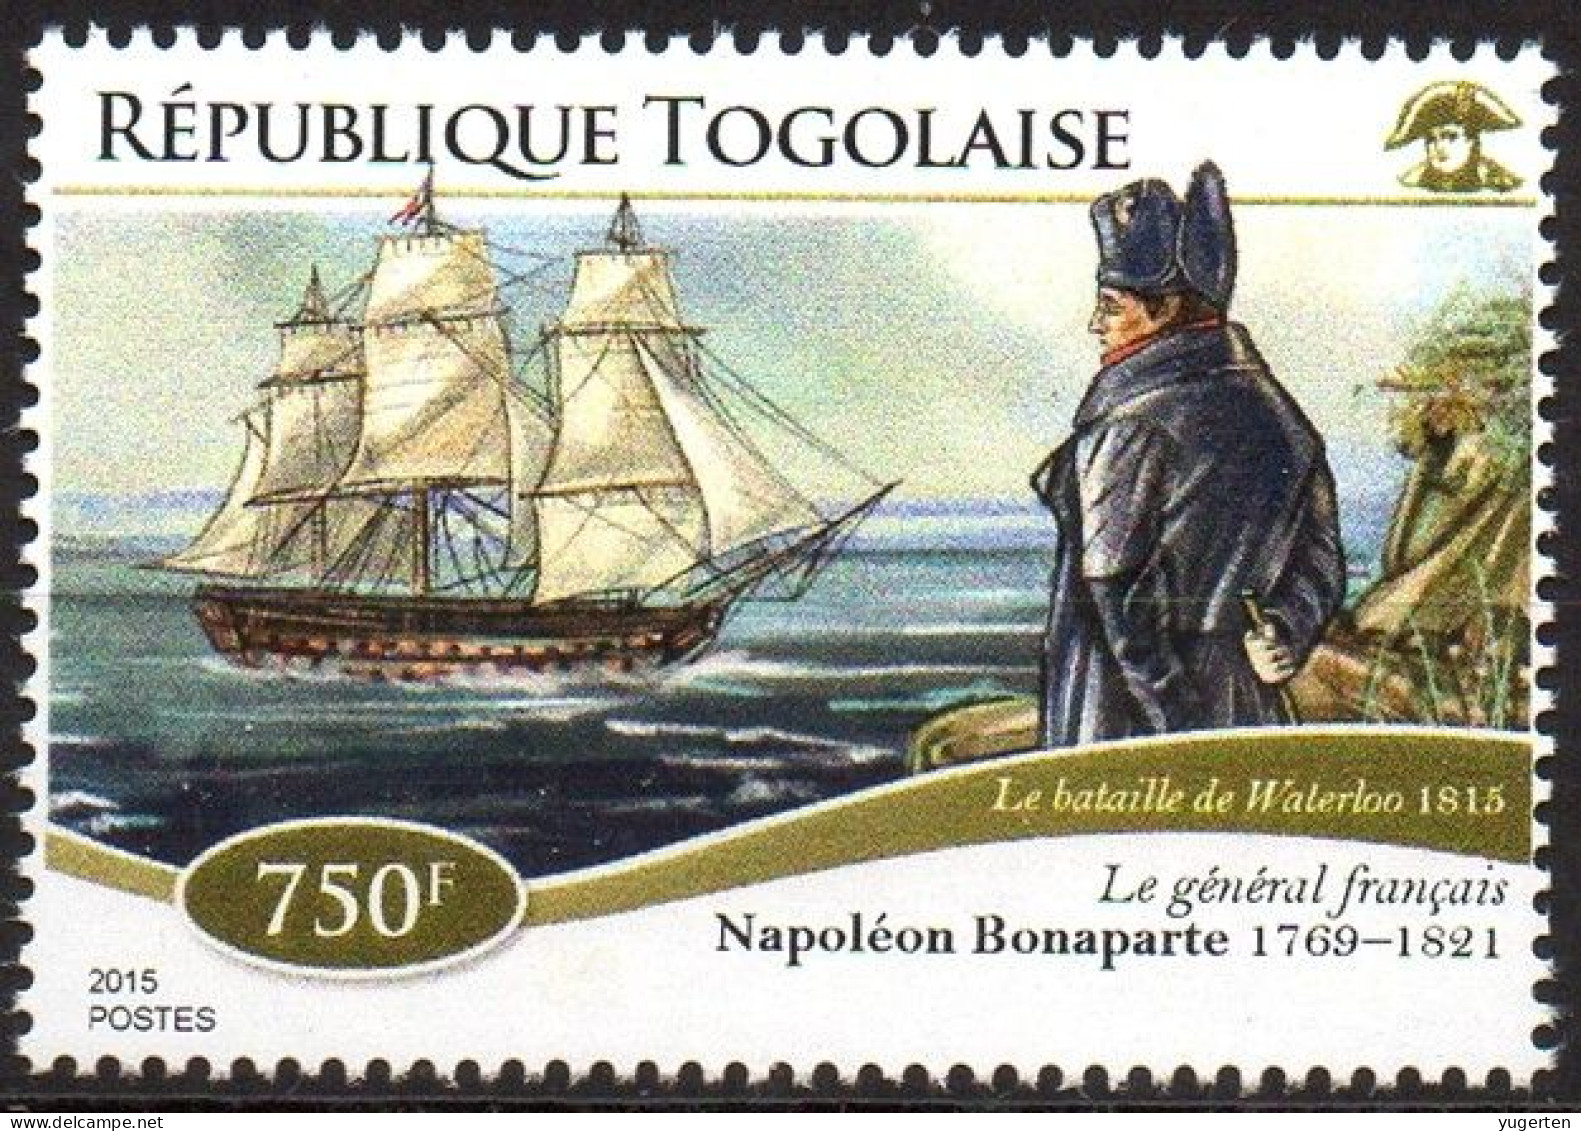 TOGO 2015 - 1v - MNH - 200th Anniversary Of Waterloo Battle - Napoleon Bonaparte - Napoleone - France - Ship - Napoleón